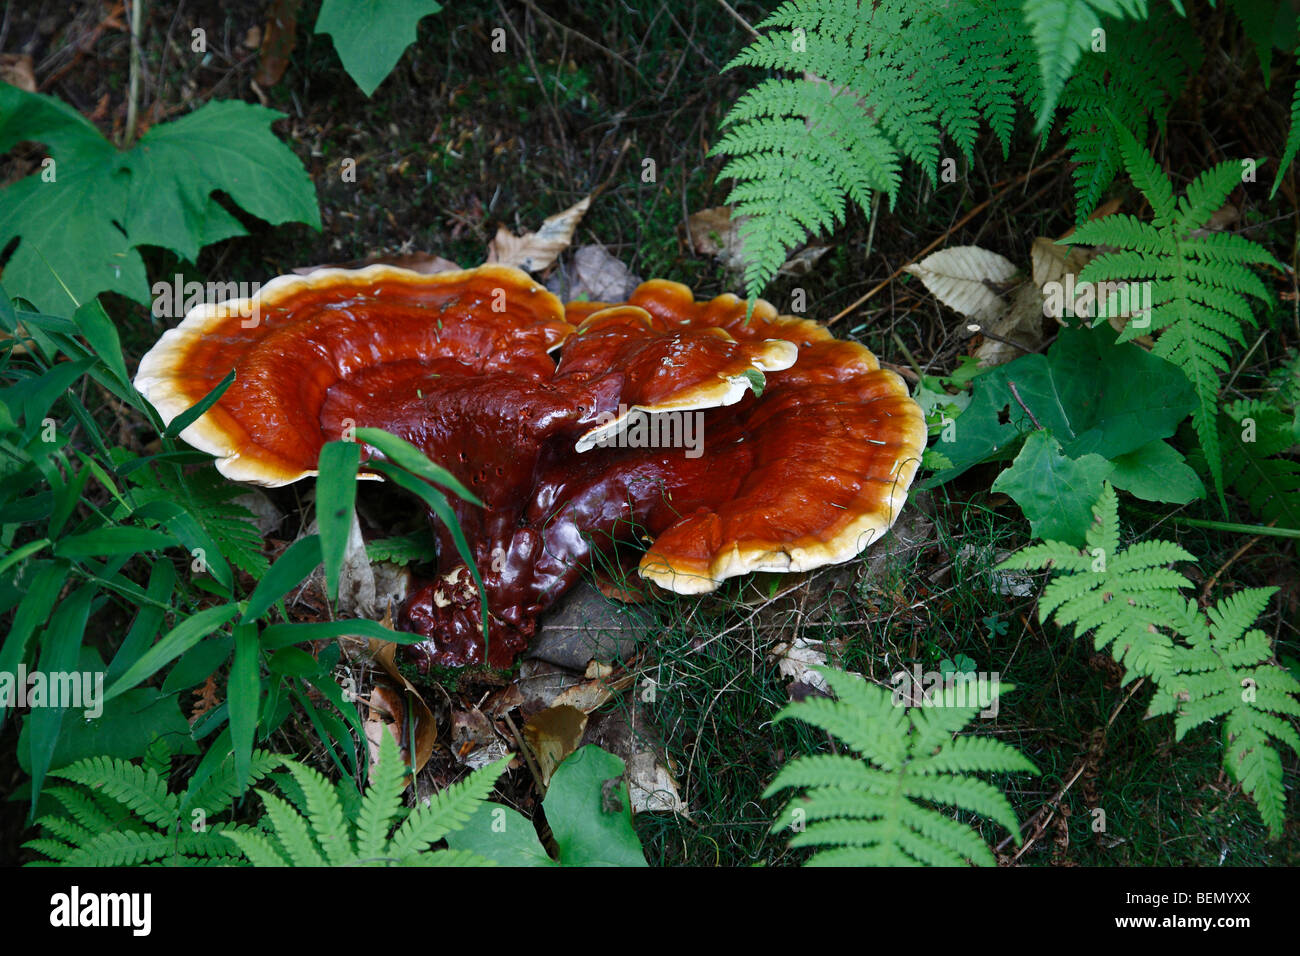 Funghi Ling Chih Ganoderma lucidum trovati nel Michigan USA funghi commestibili Reishi nessuno foto la natura verde è ispirazione hi-res Foto Stock